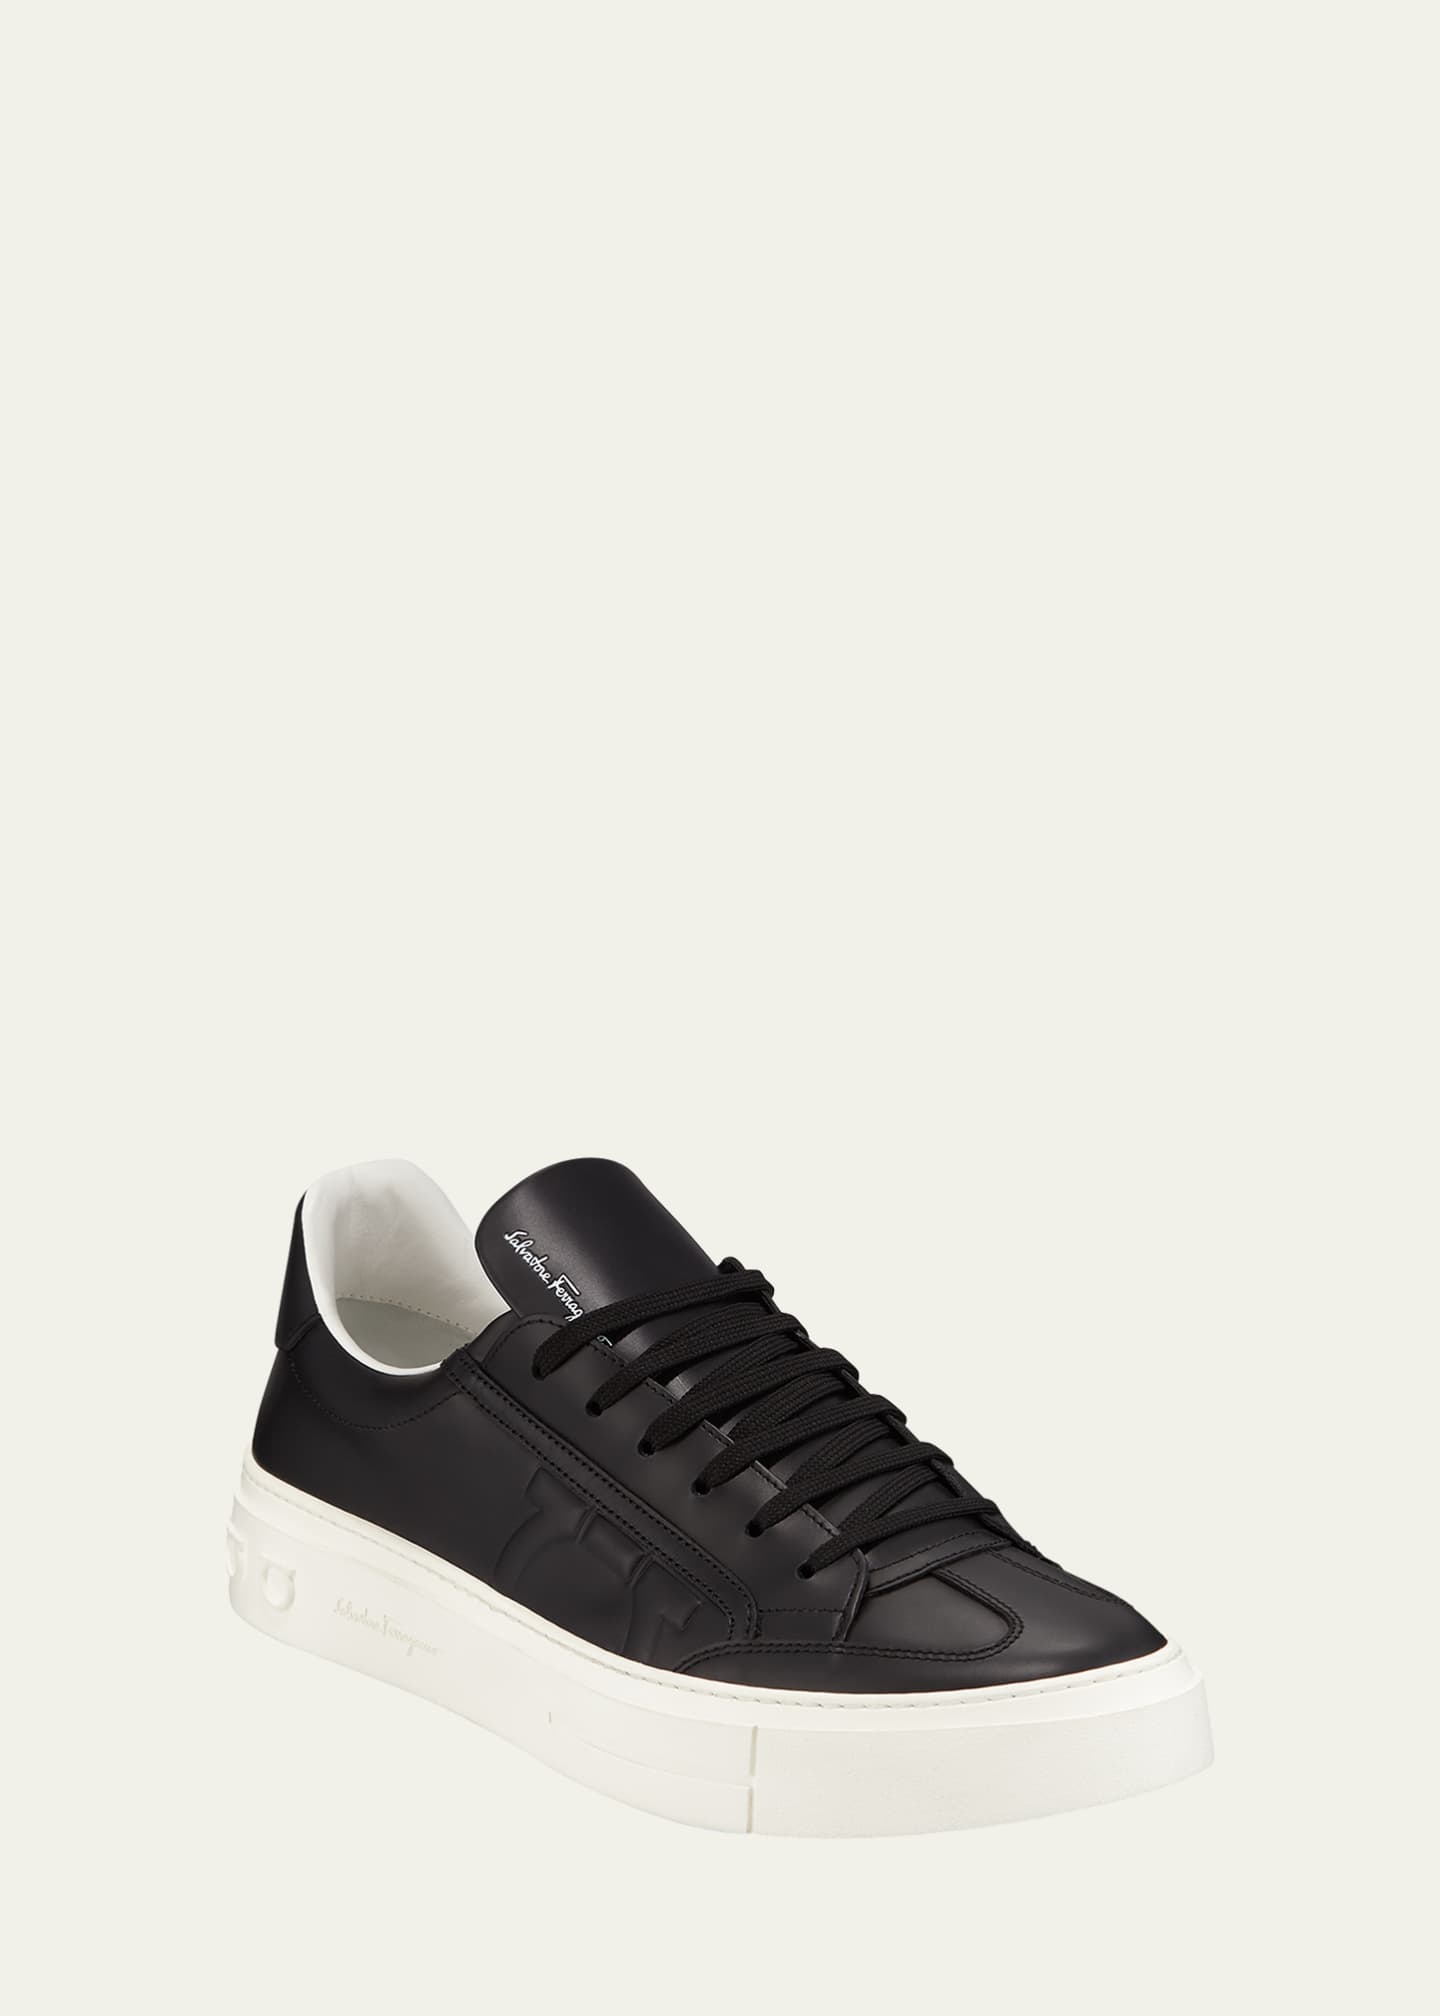 Salvatore Ferragamo Men's Borg Leather Low-Top Sneakers, Black ...